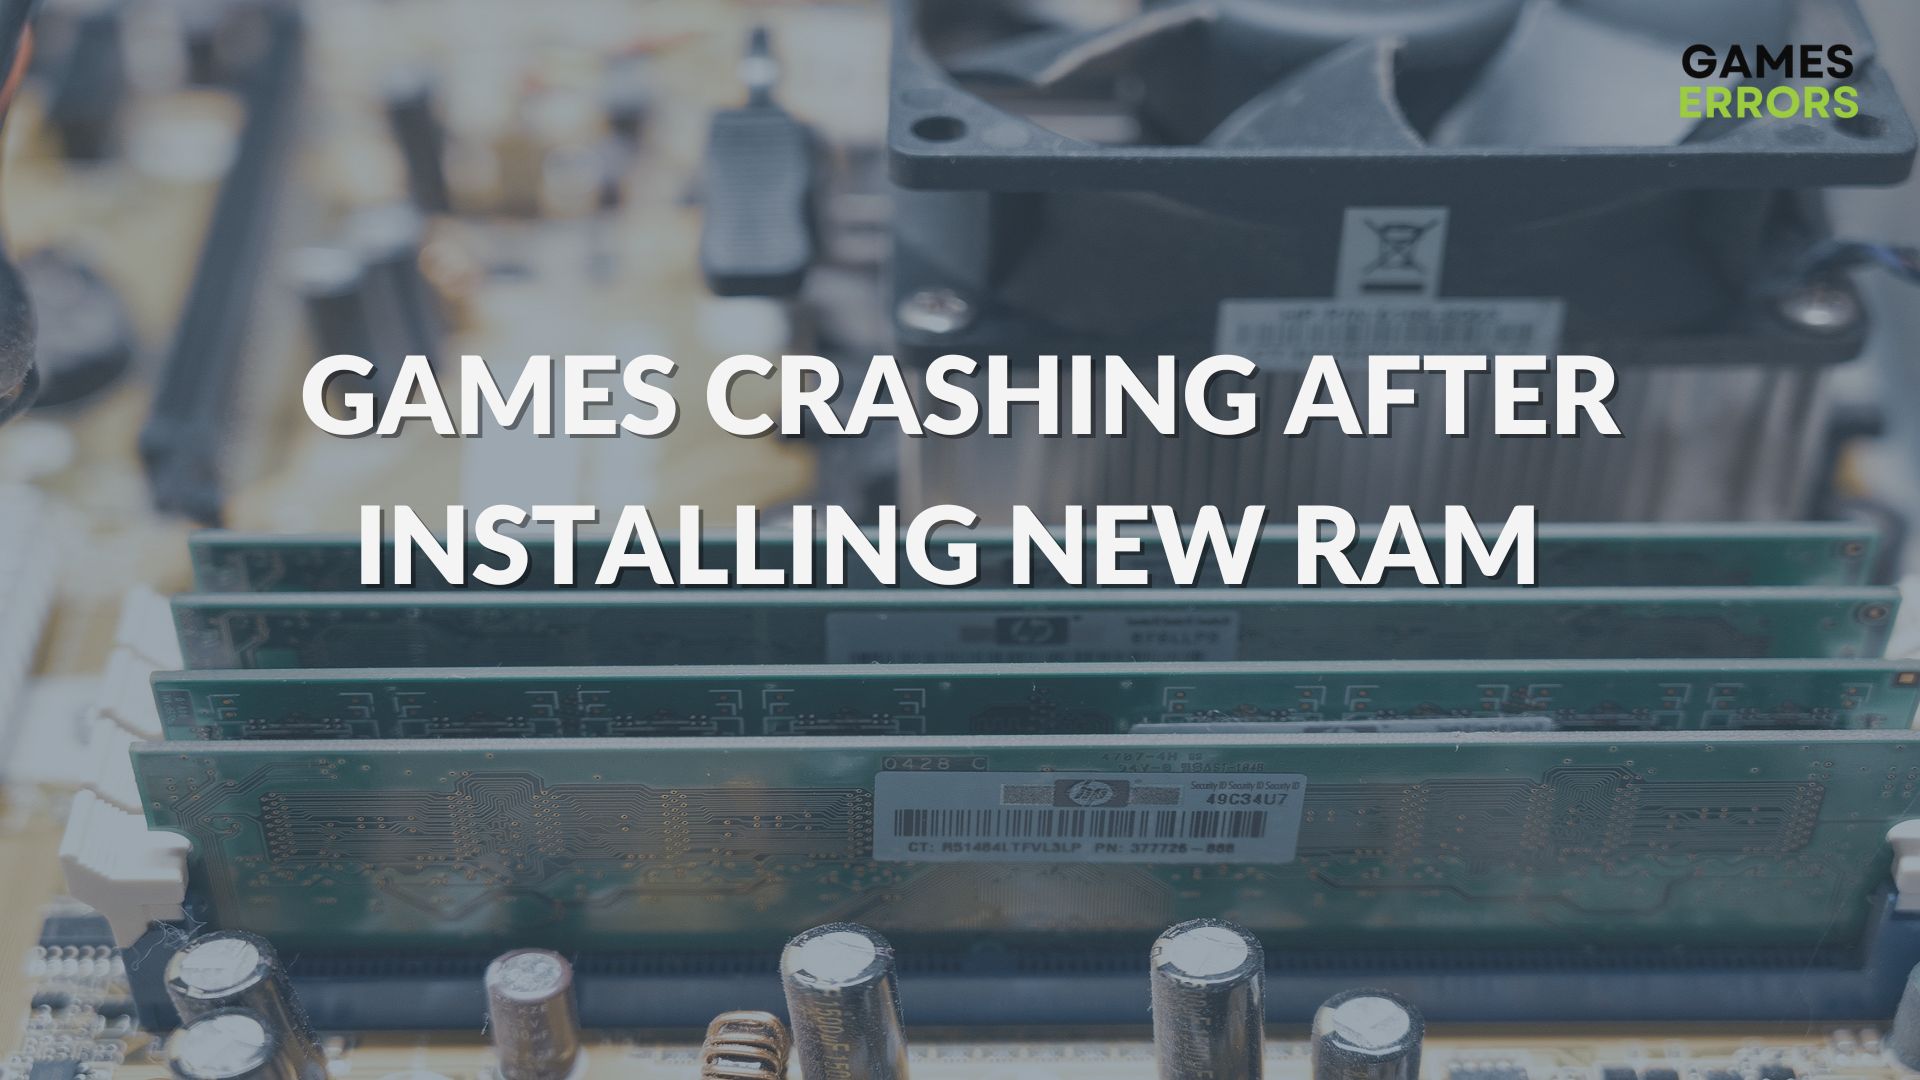 GAMES CRASHING AFTER INSTALLING NEW RAM